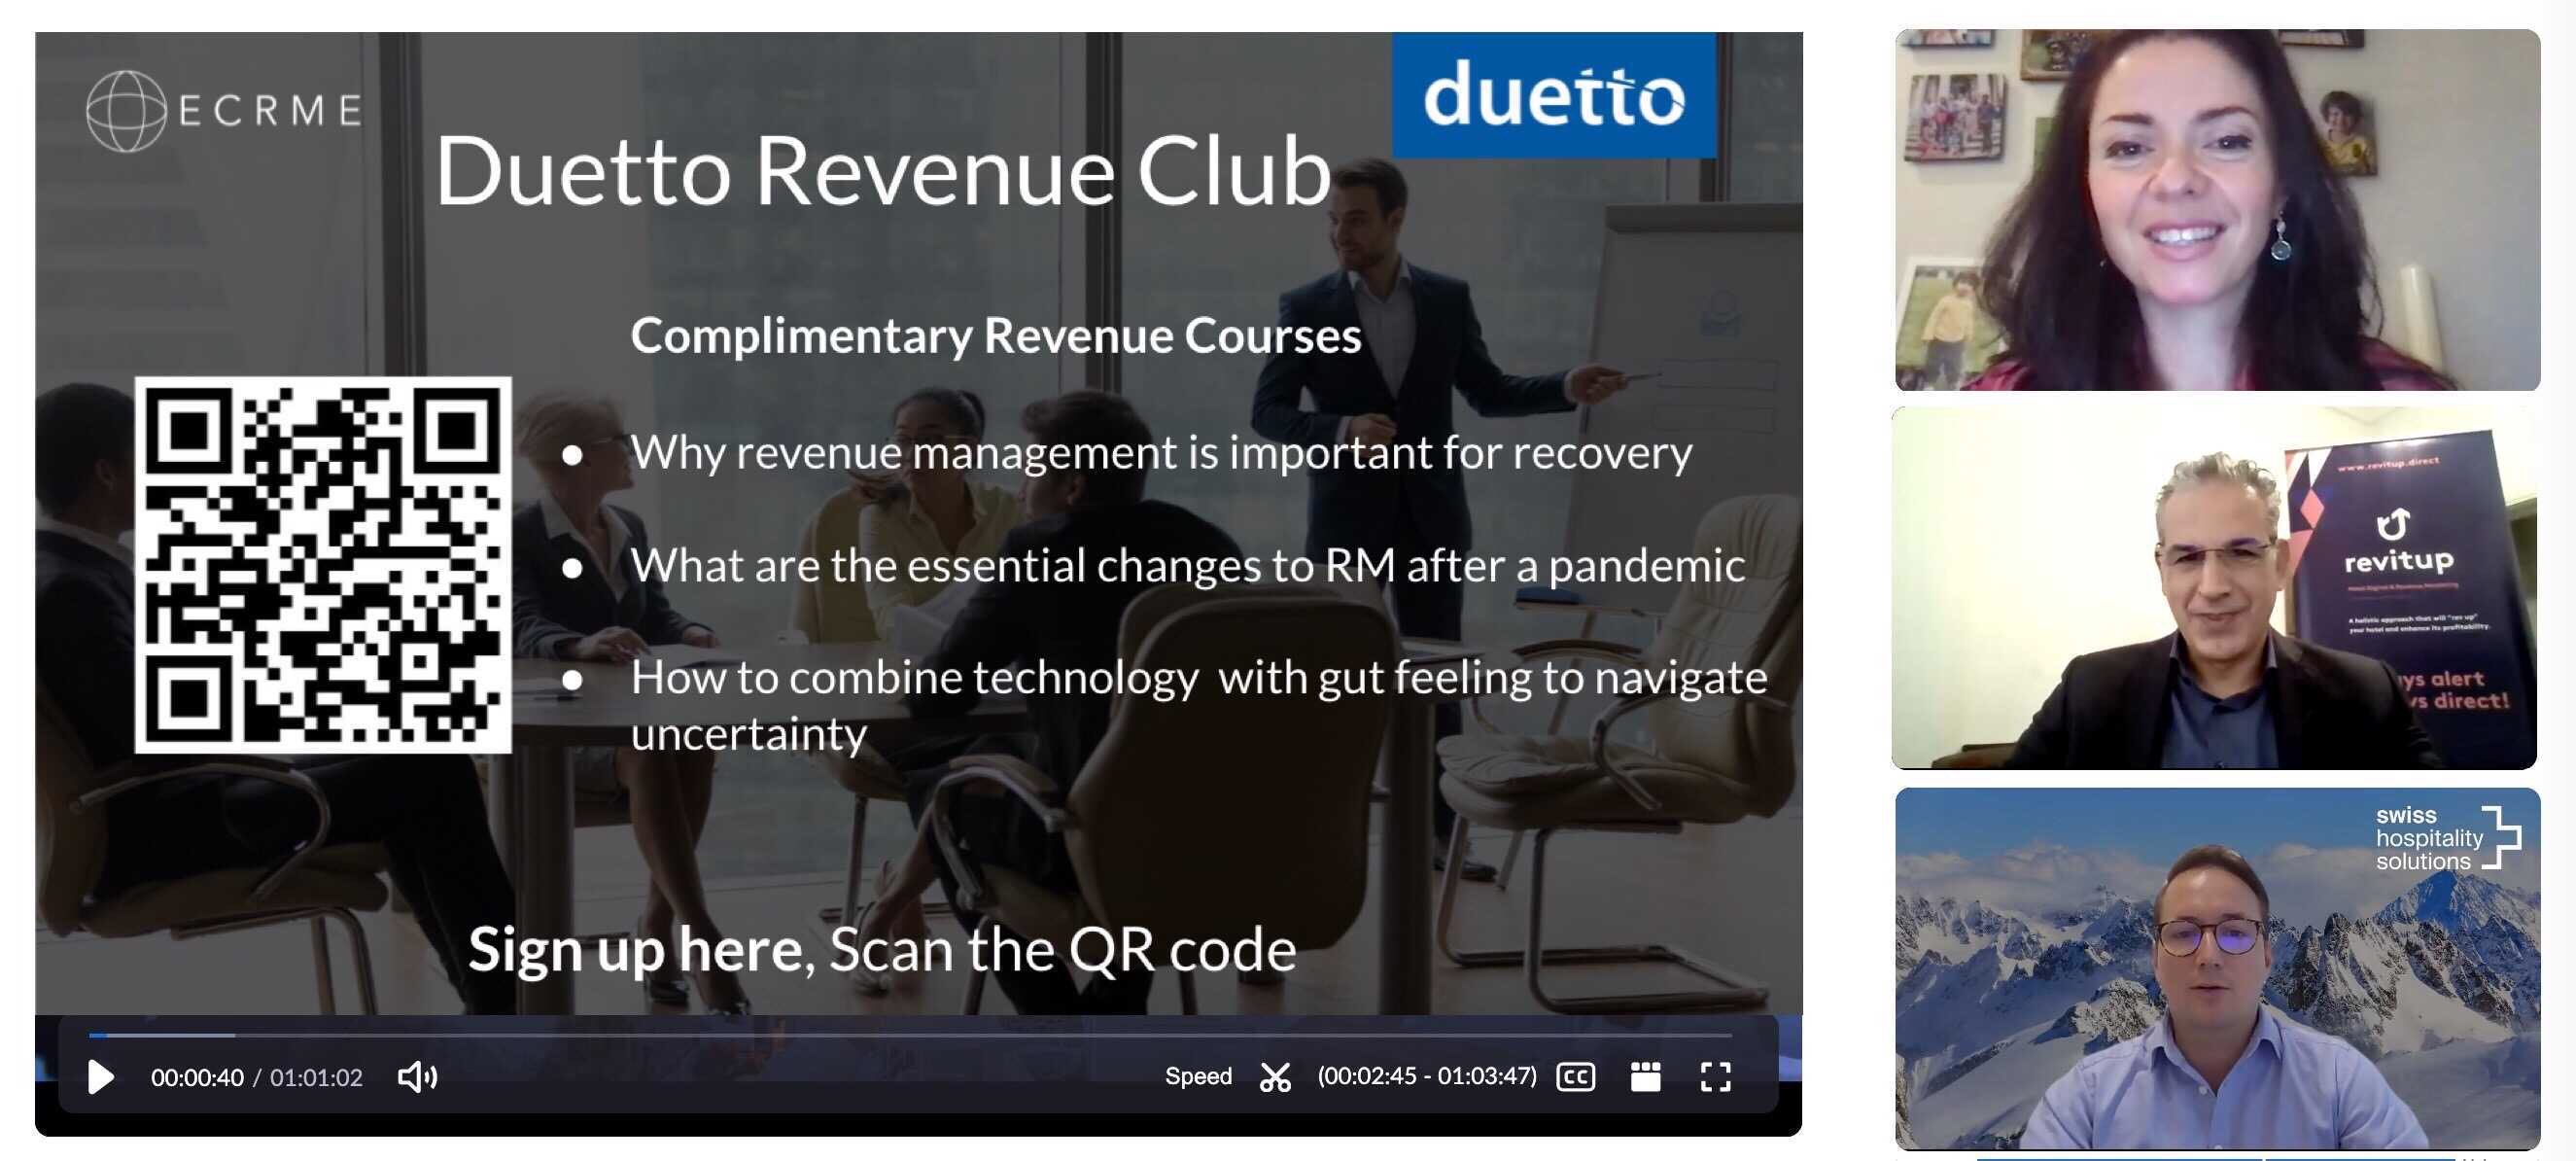 Duetto Revenue Club webinar